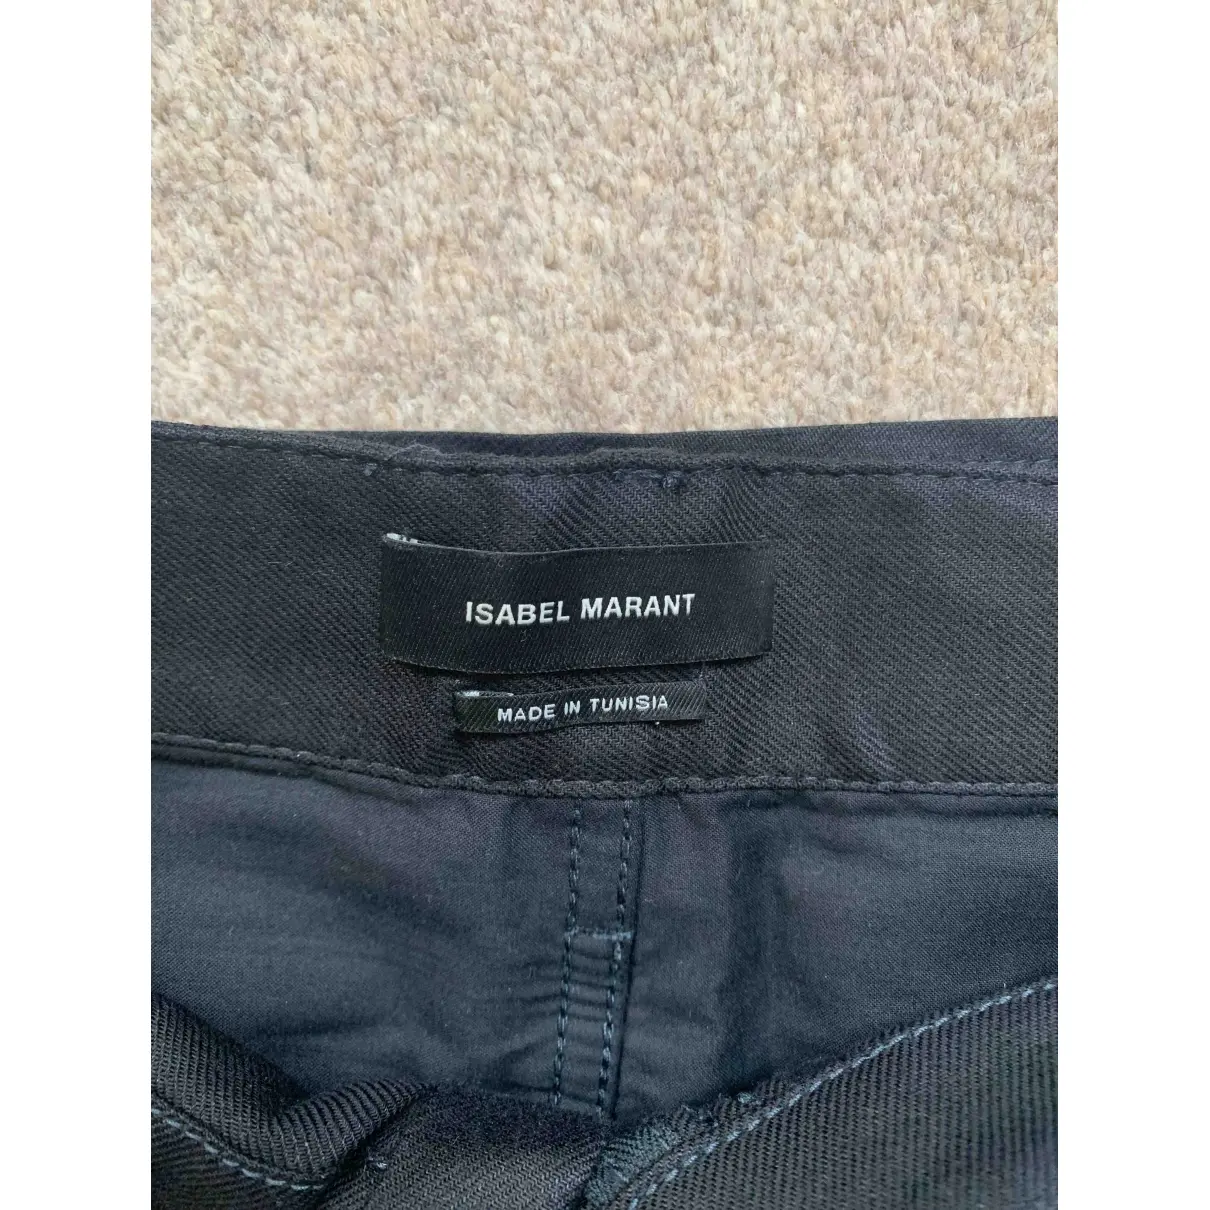 Buy Isabel Marant Black Cotton Shorts online